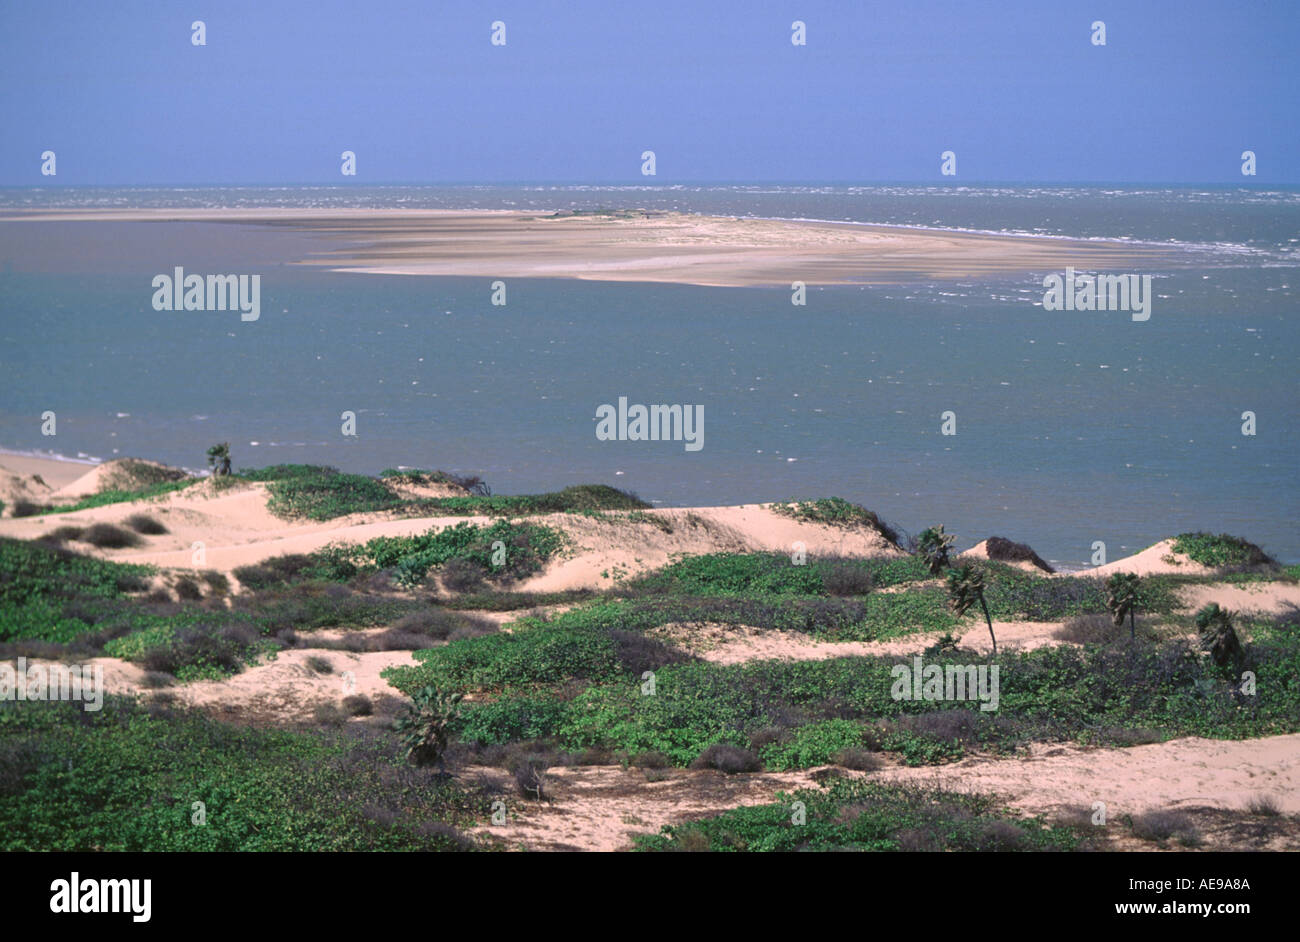 Dunes and ocean Brazil Stock Photo